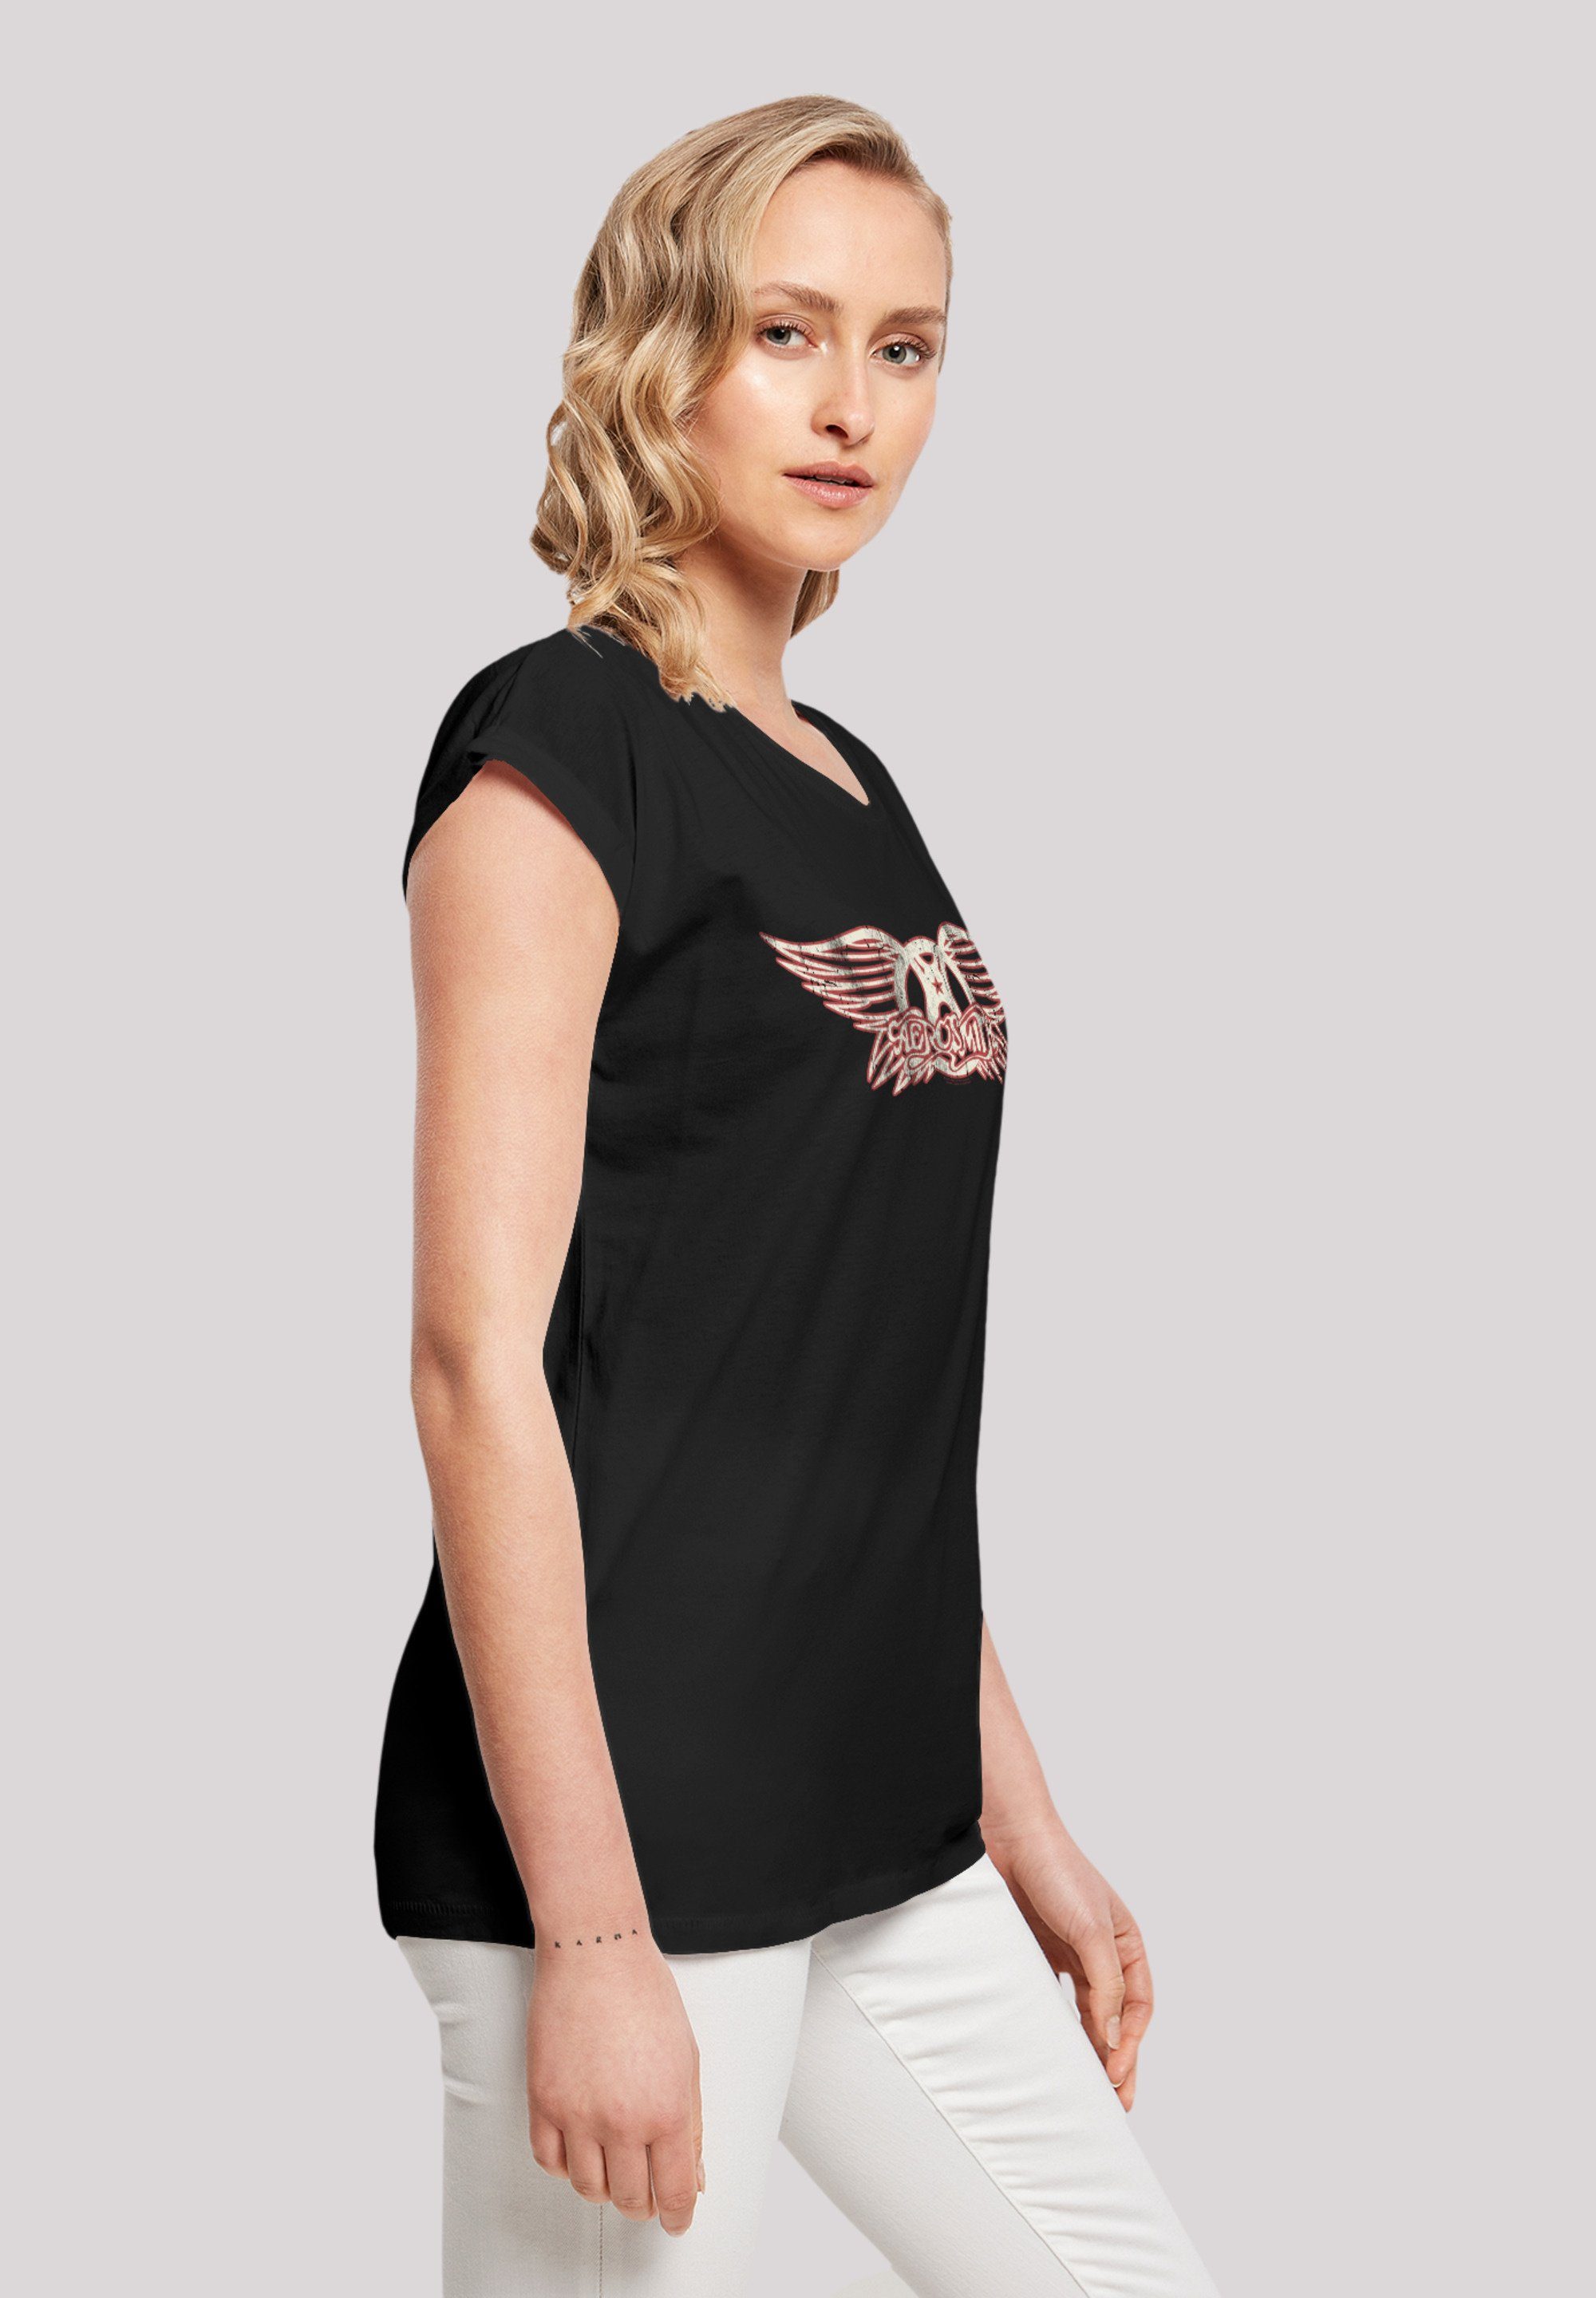 Band T-Shirt Qualität, Rock Premium F4NT4STIC Band Aerosmith Rock-Musik, Logo